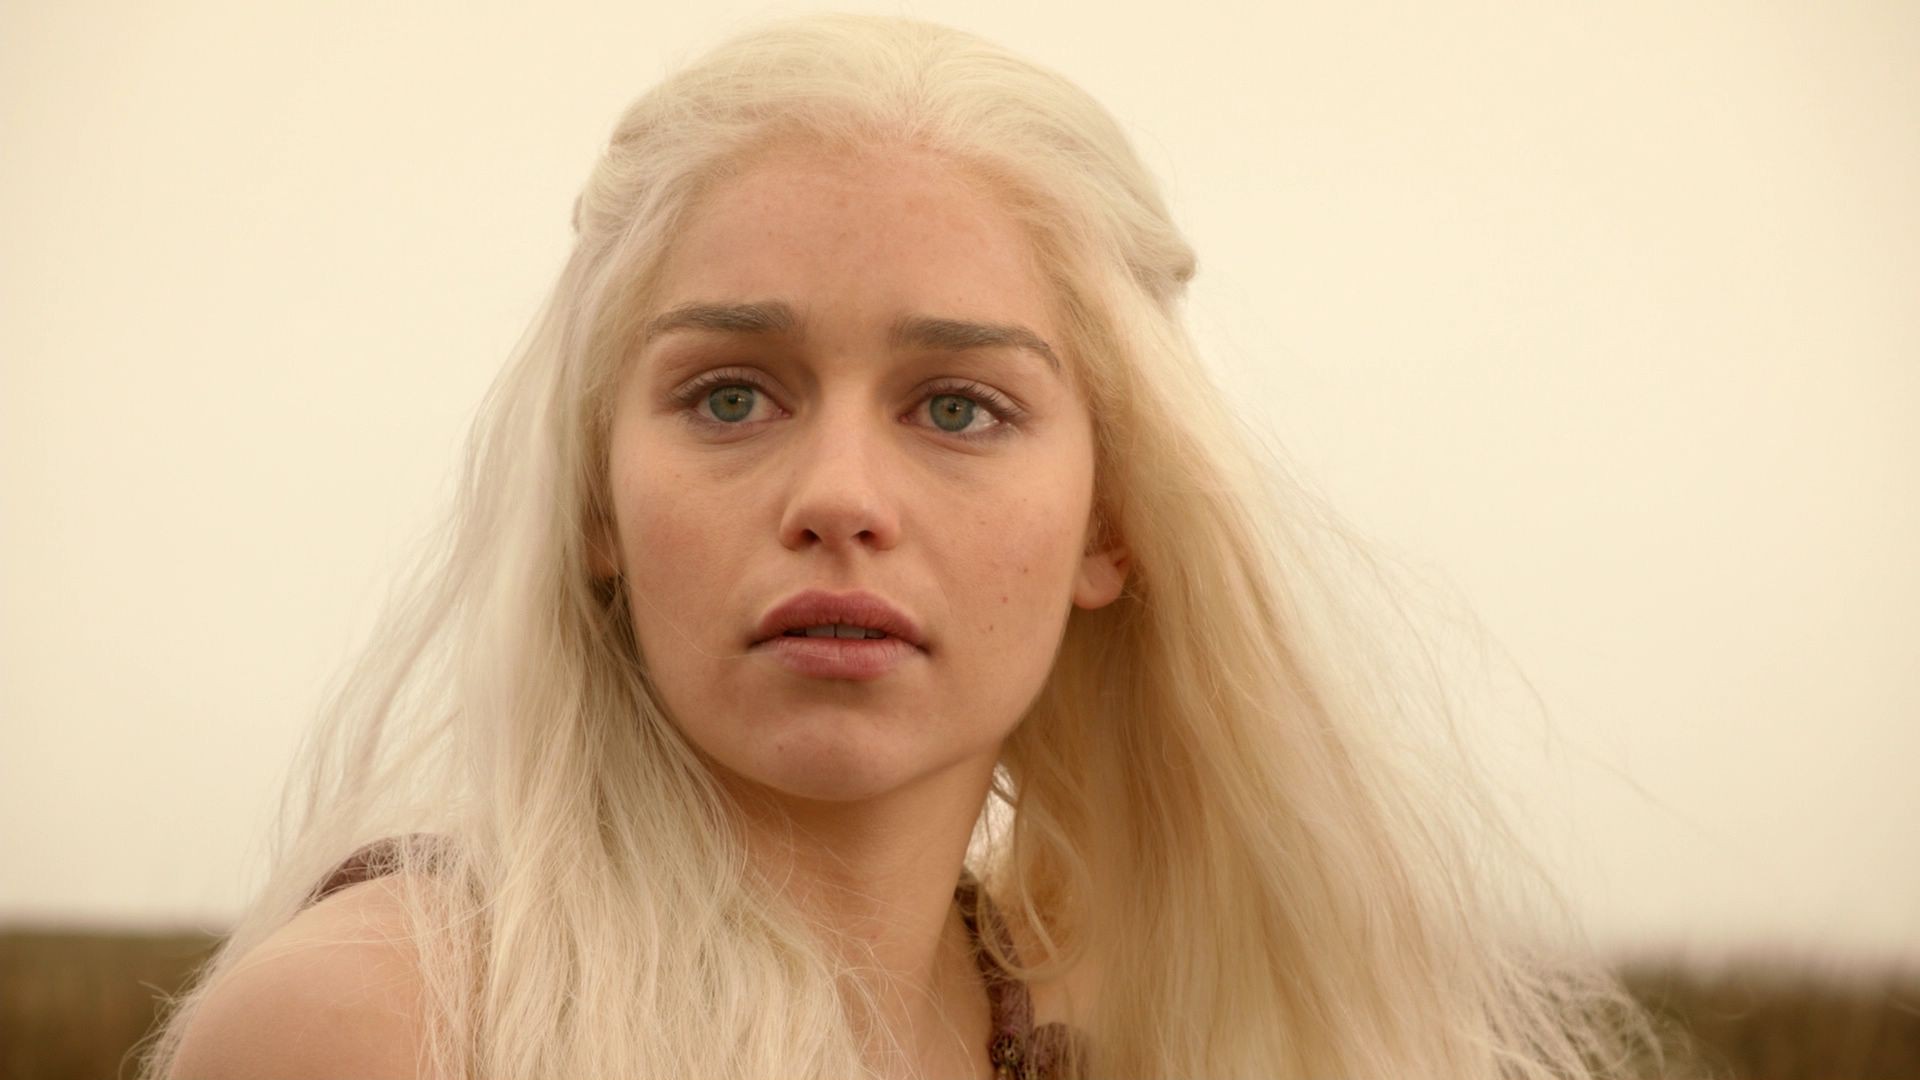 Wallpaper - White Hair Girl From Game Of Thrones - HD Wallpaper 